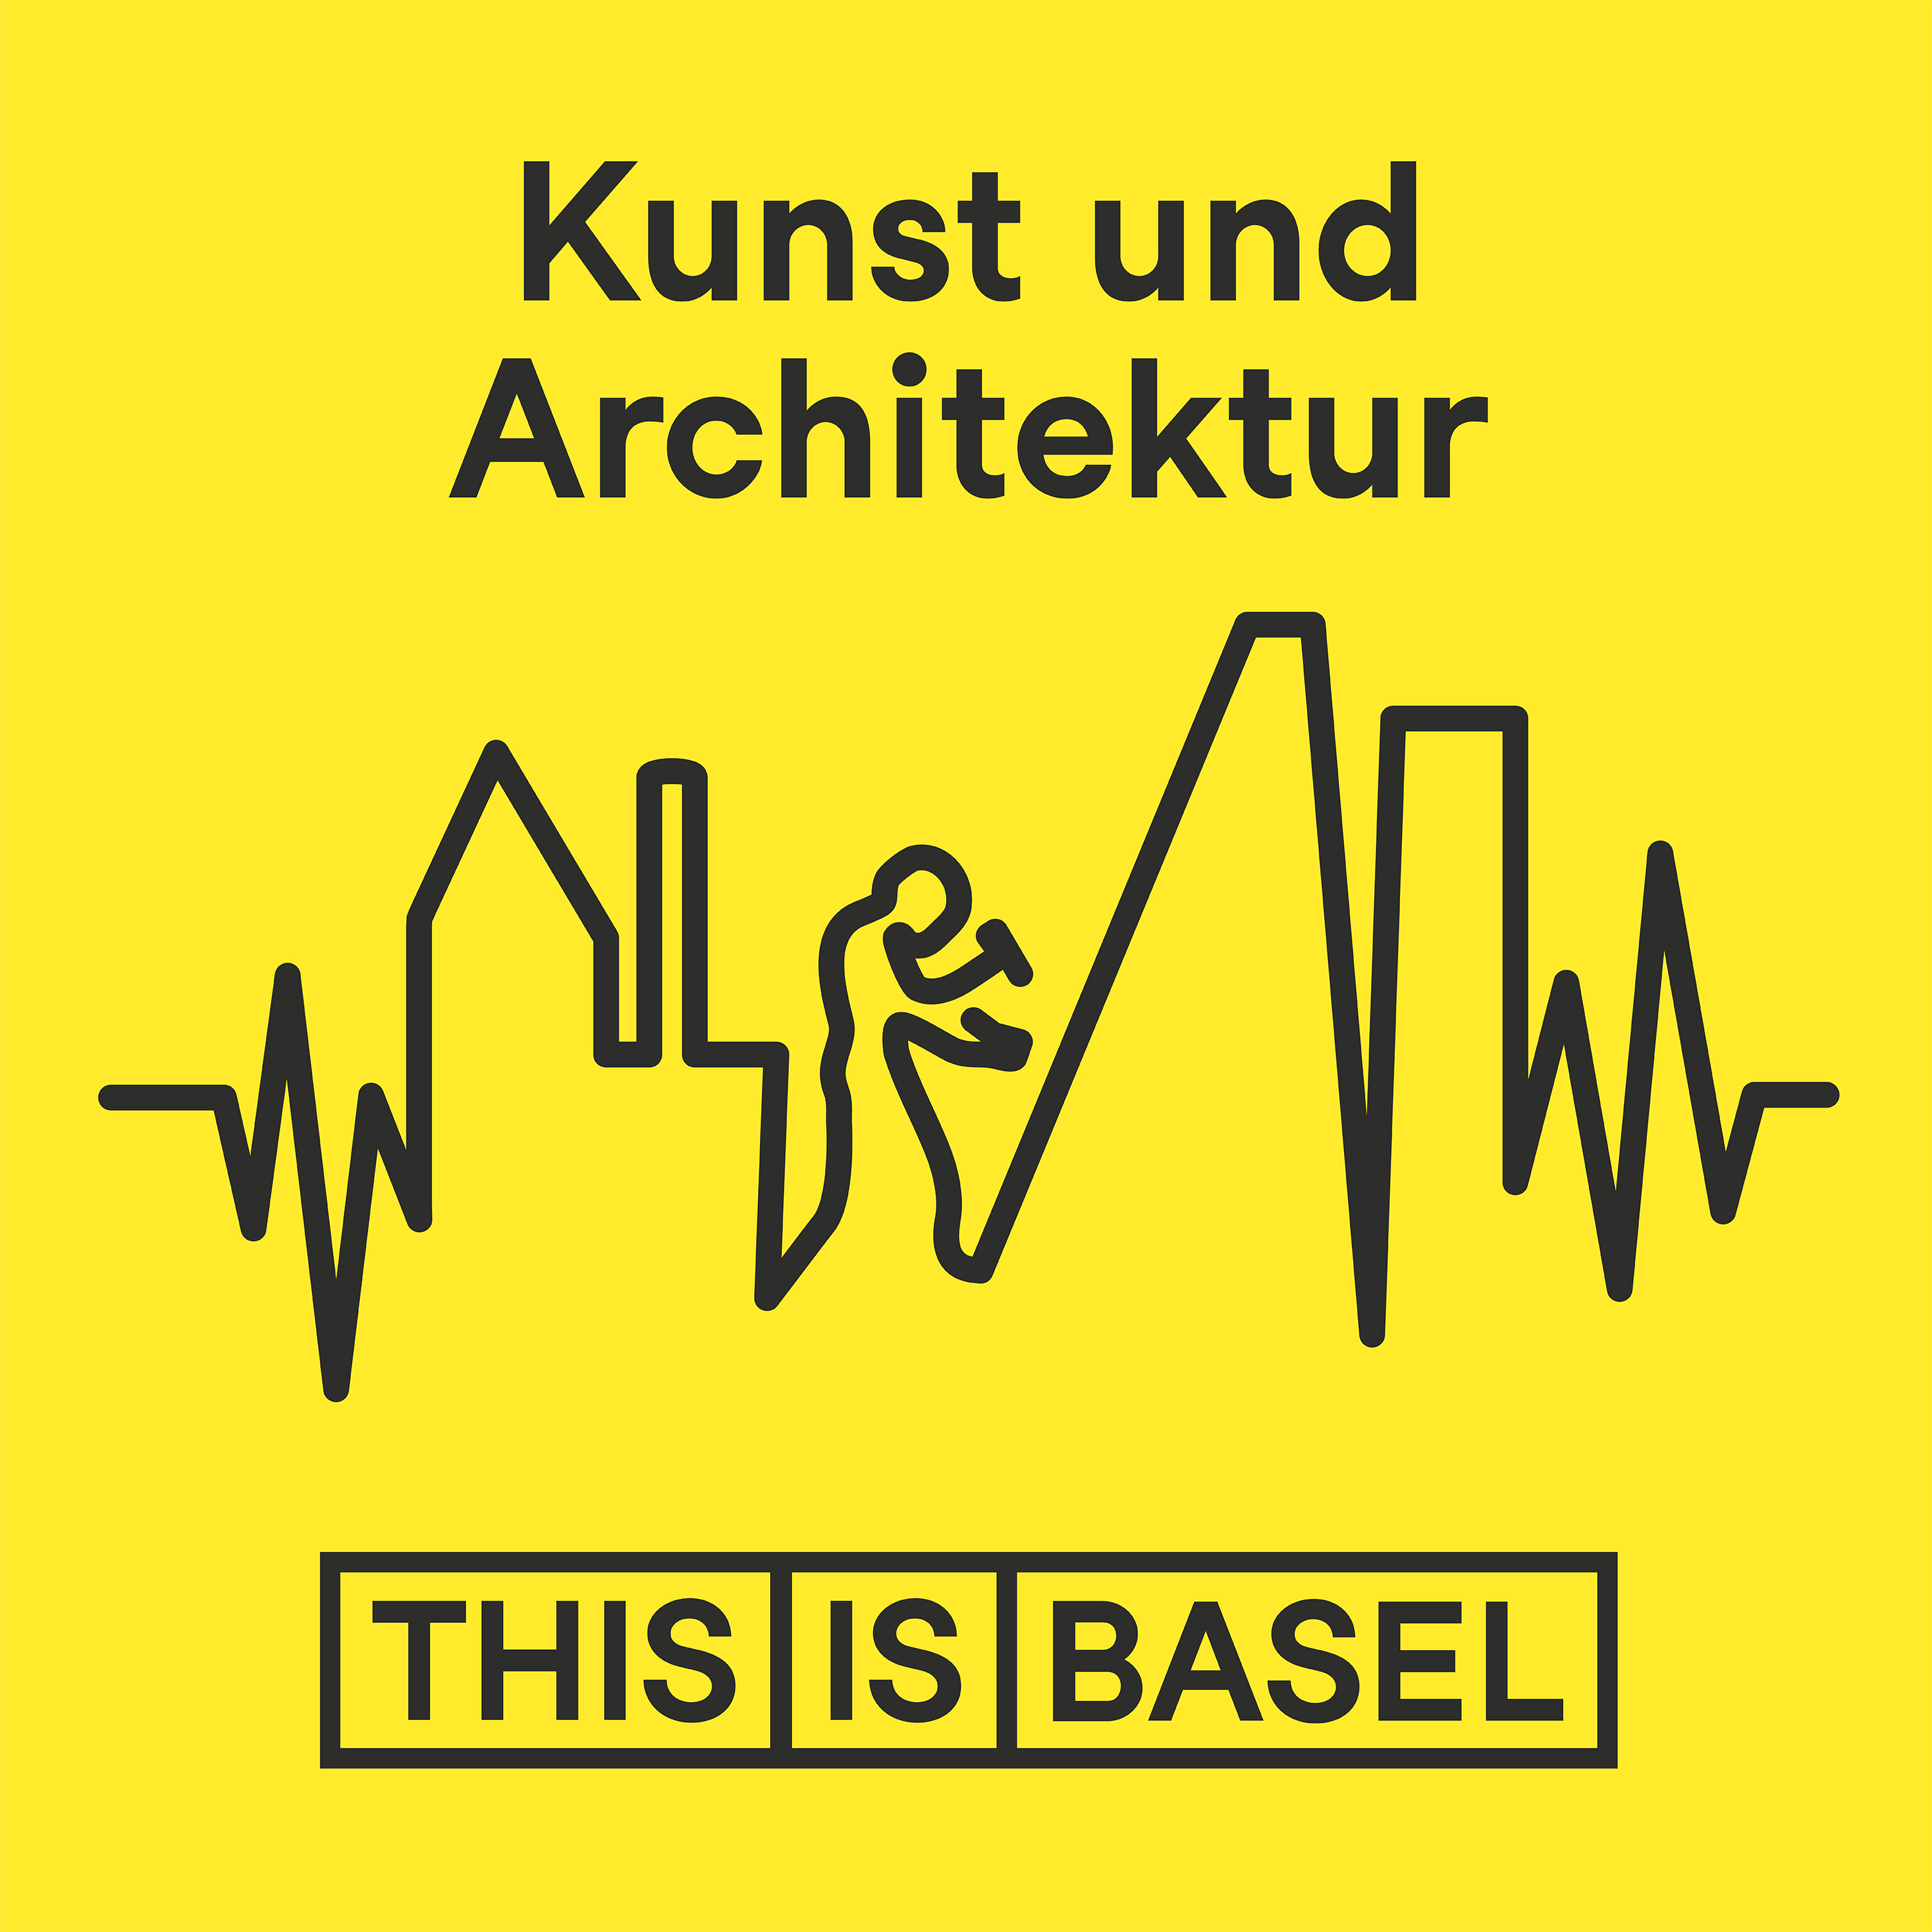 4. Basel Made, Bebbi Made – Kulturinitiativen & selbstinitiierte Projekte